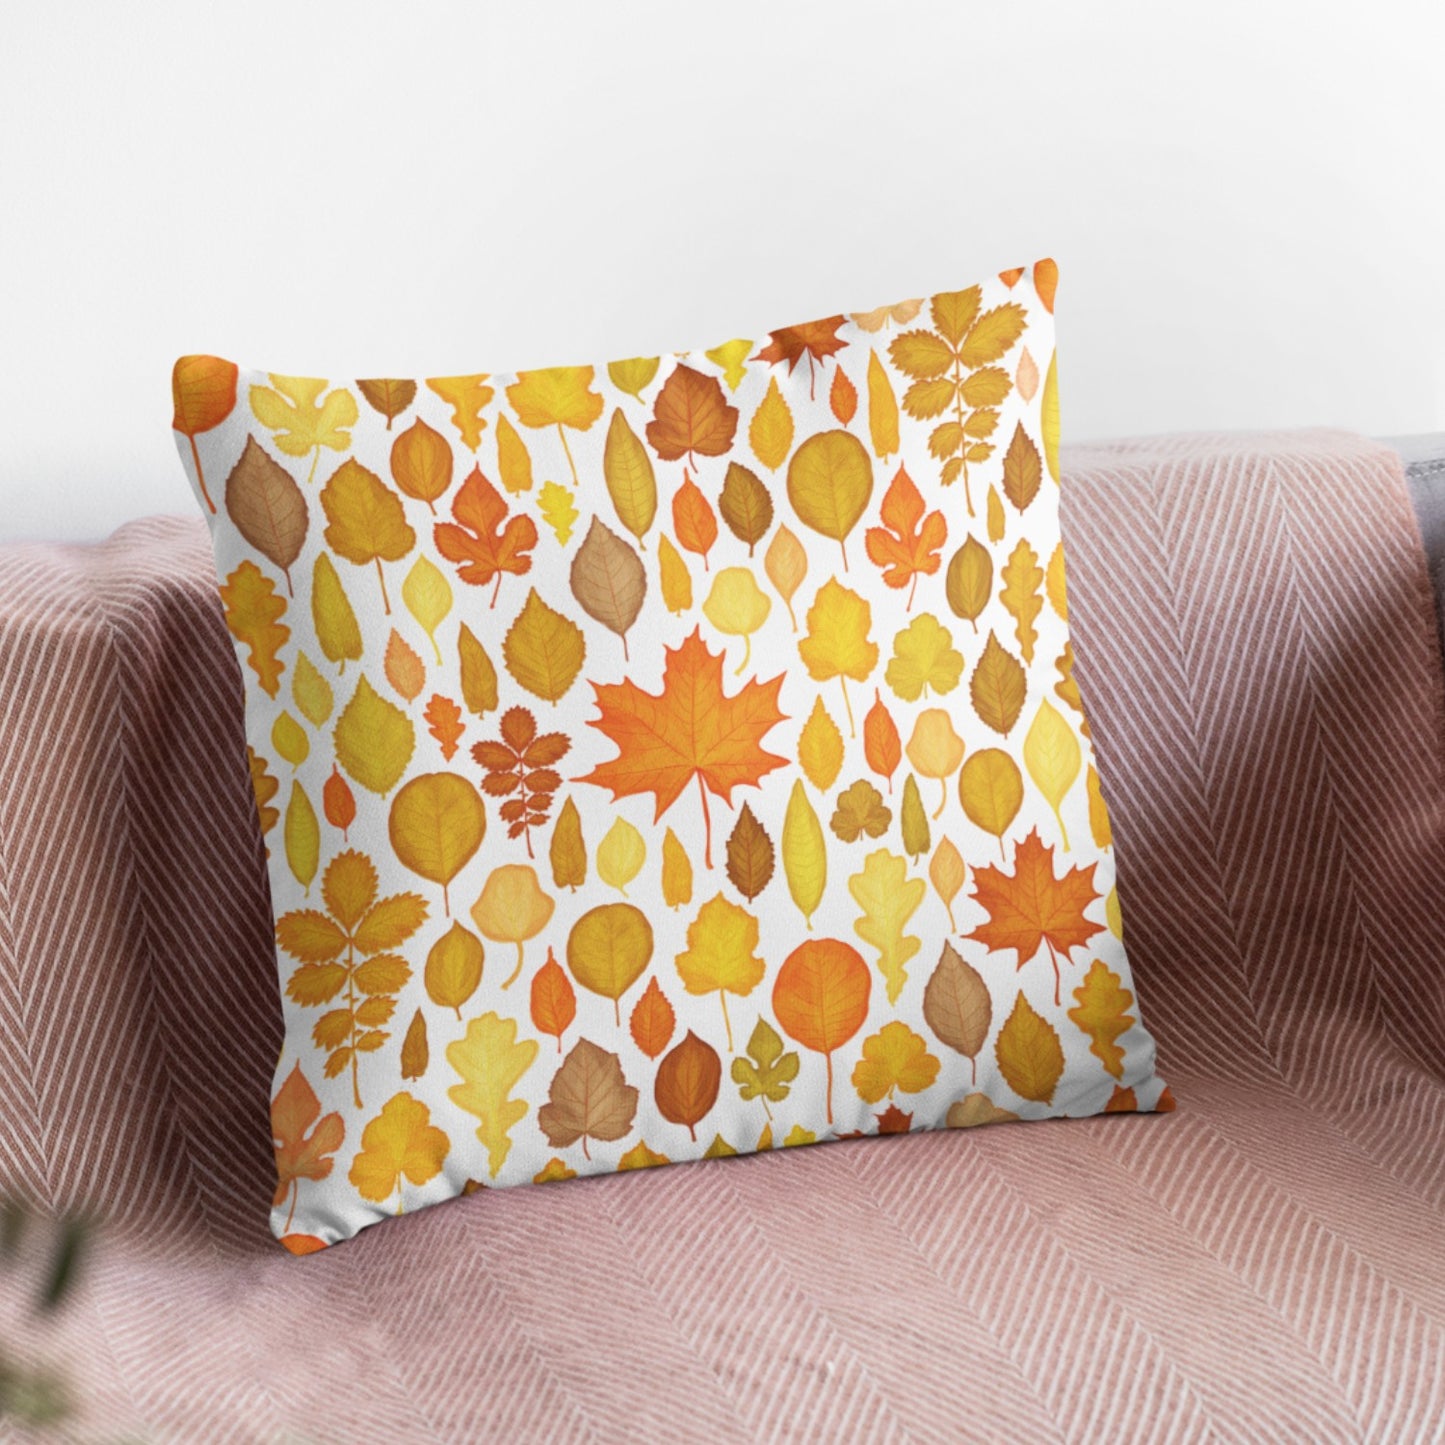 Autumn Decor Throw Pillow, Living Room Sofa Fall Decor Pillow Cover by Homeezone